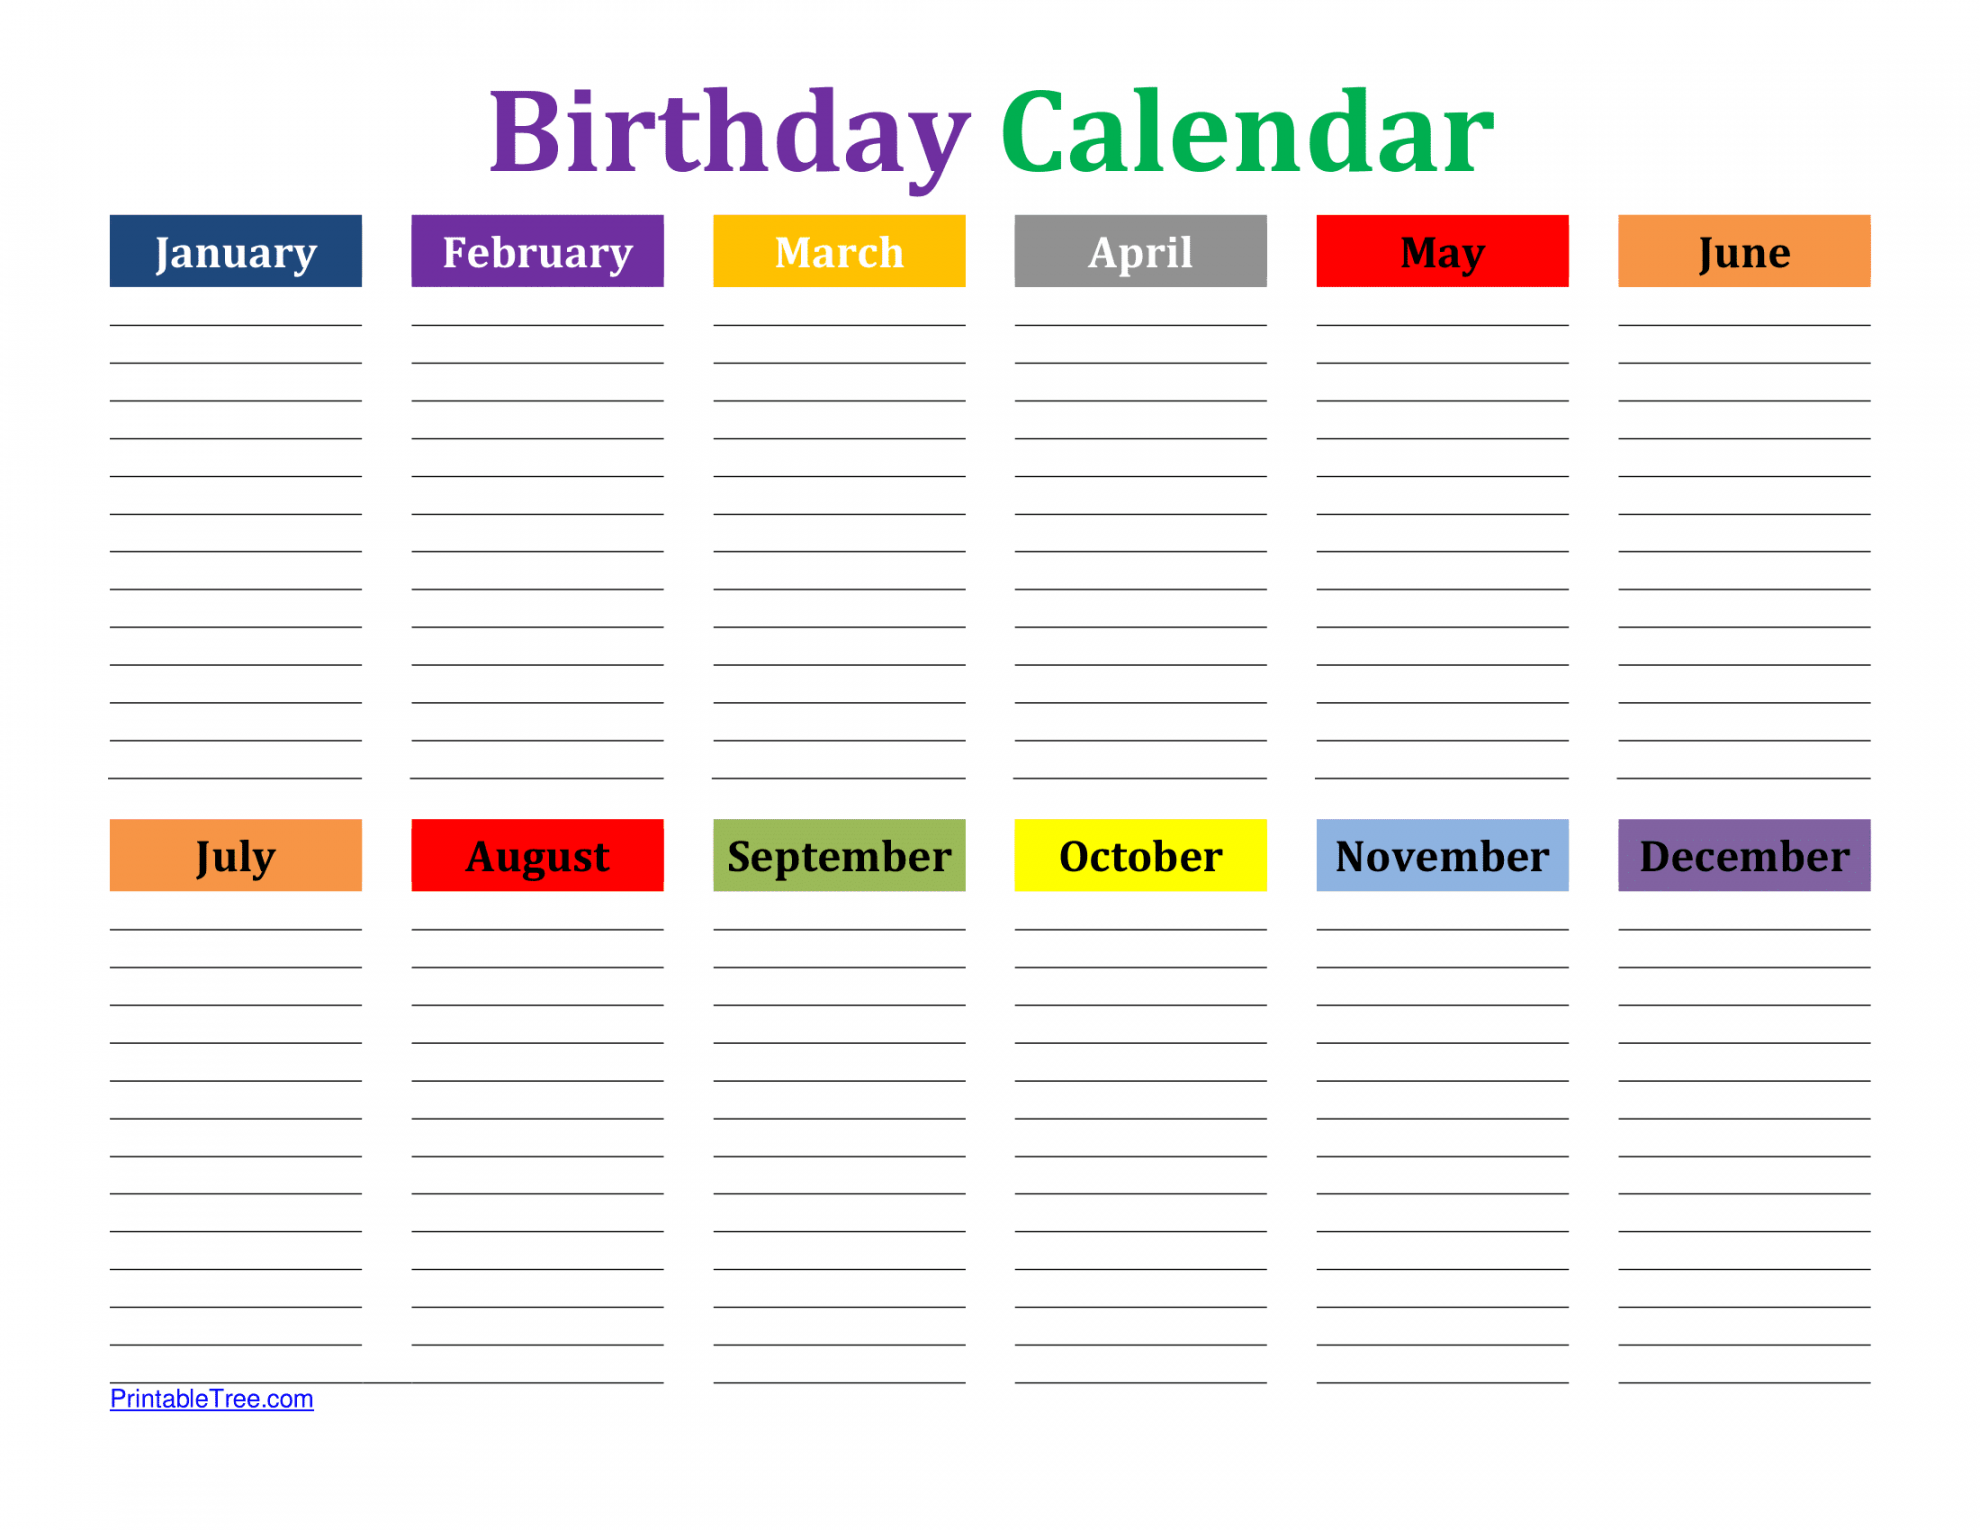 Free Birthday Calendar Printable PDF Templates Printable Tree